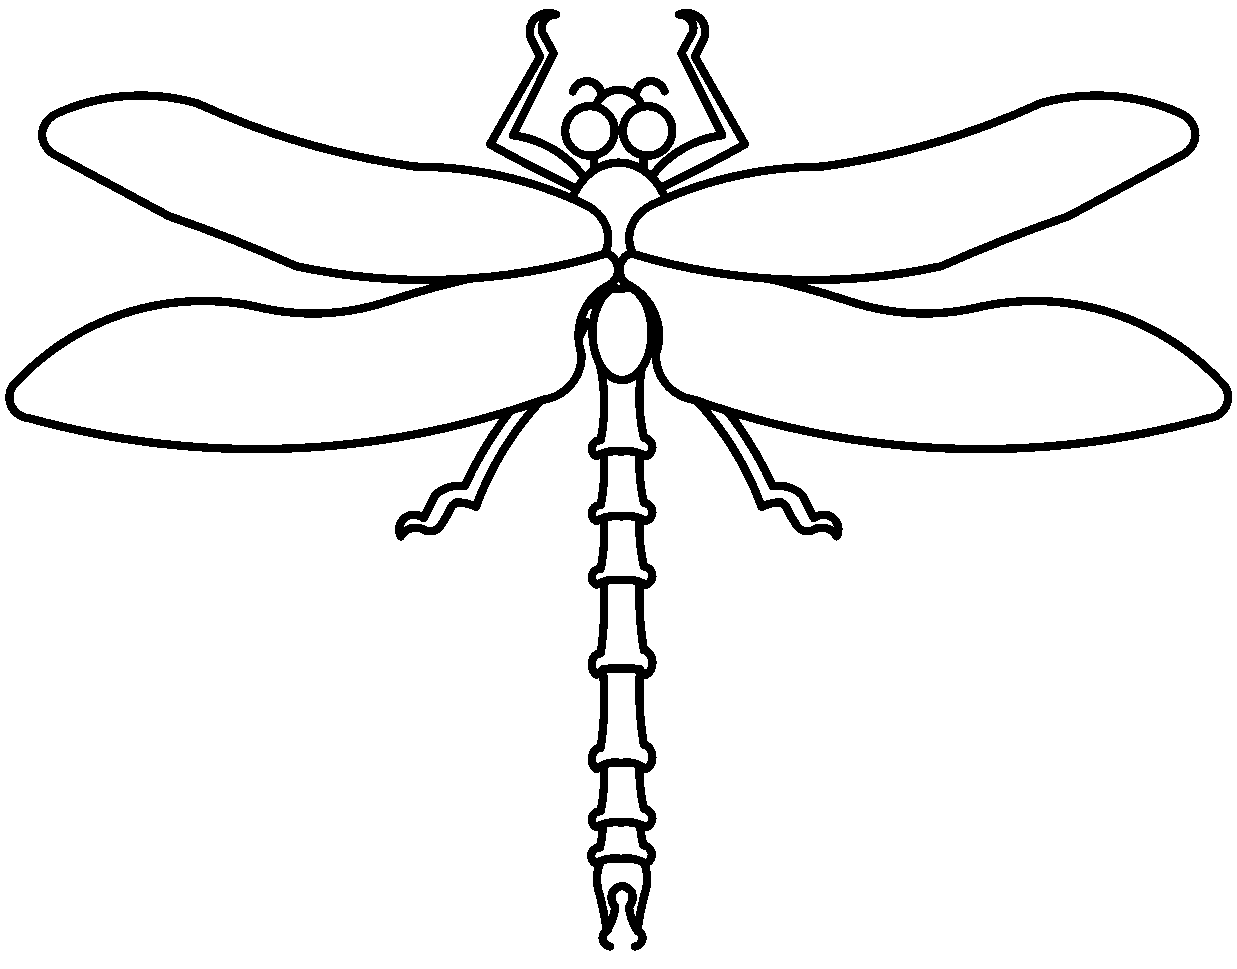 Dragonfly - Traceable Heraldic Art